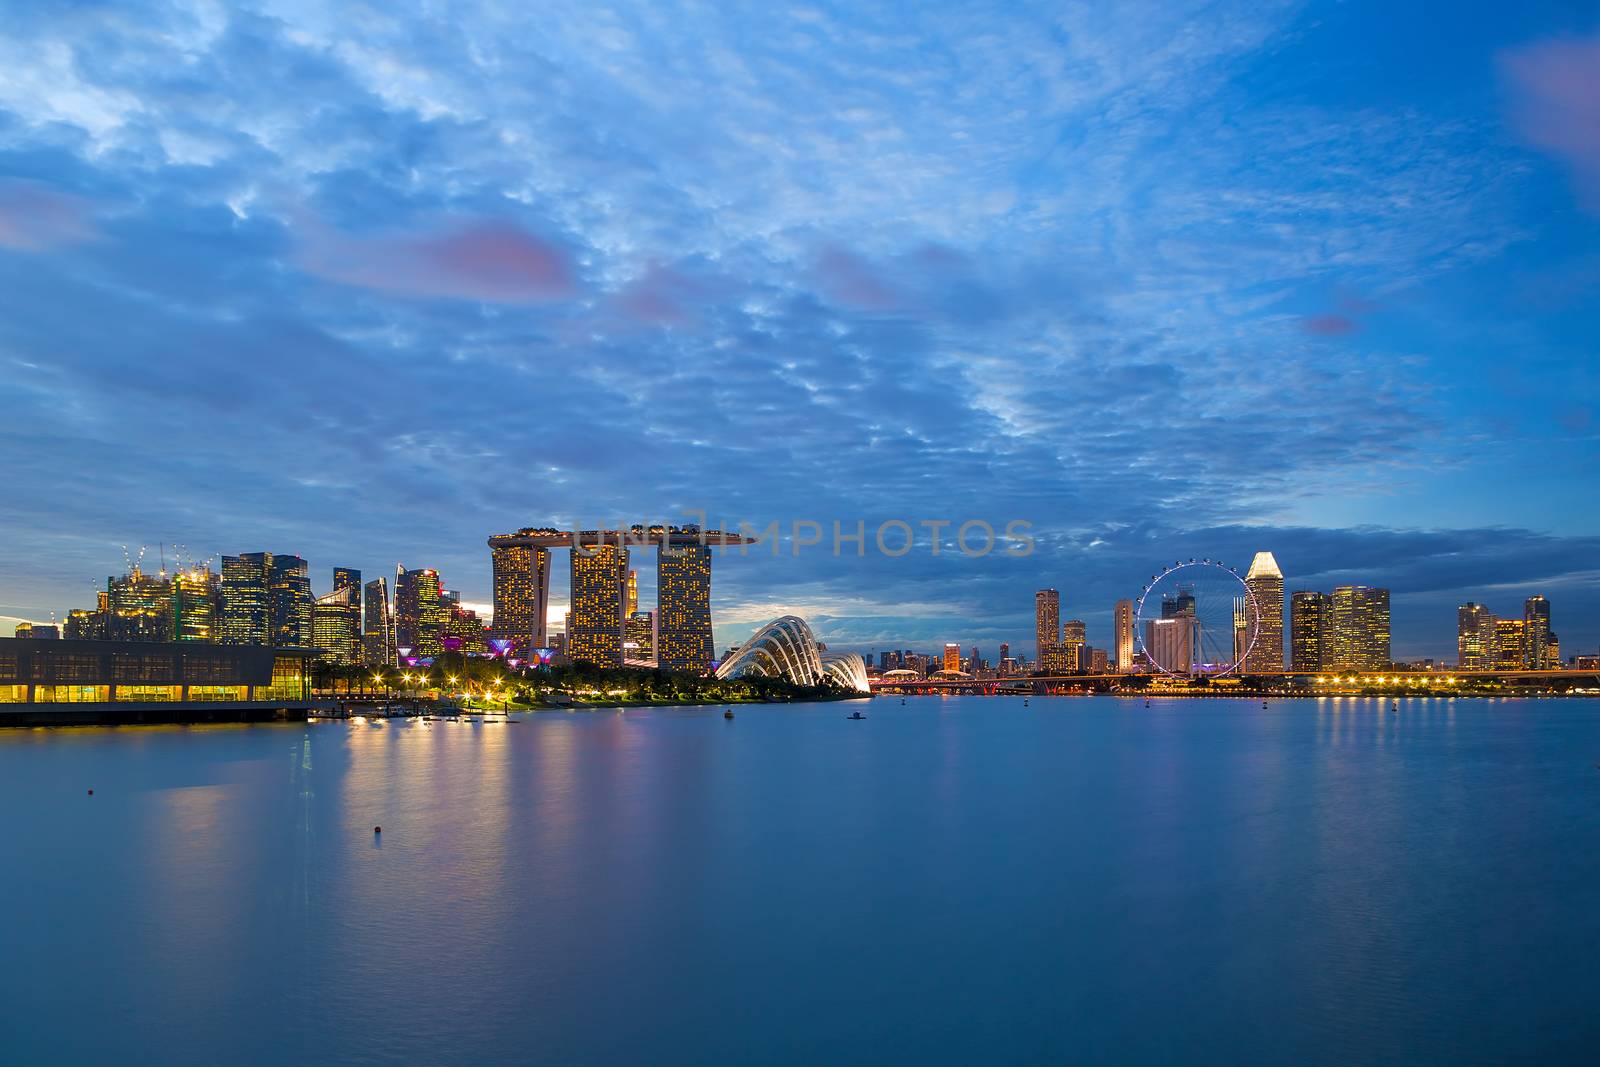 Singapore entertainment tourist central business district city skyline during evening blue hour